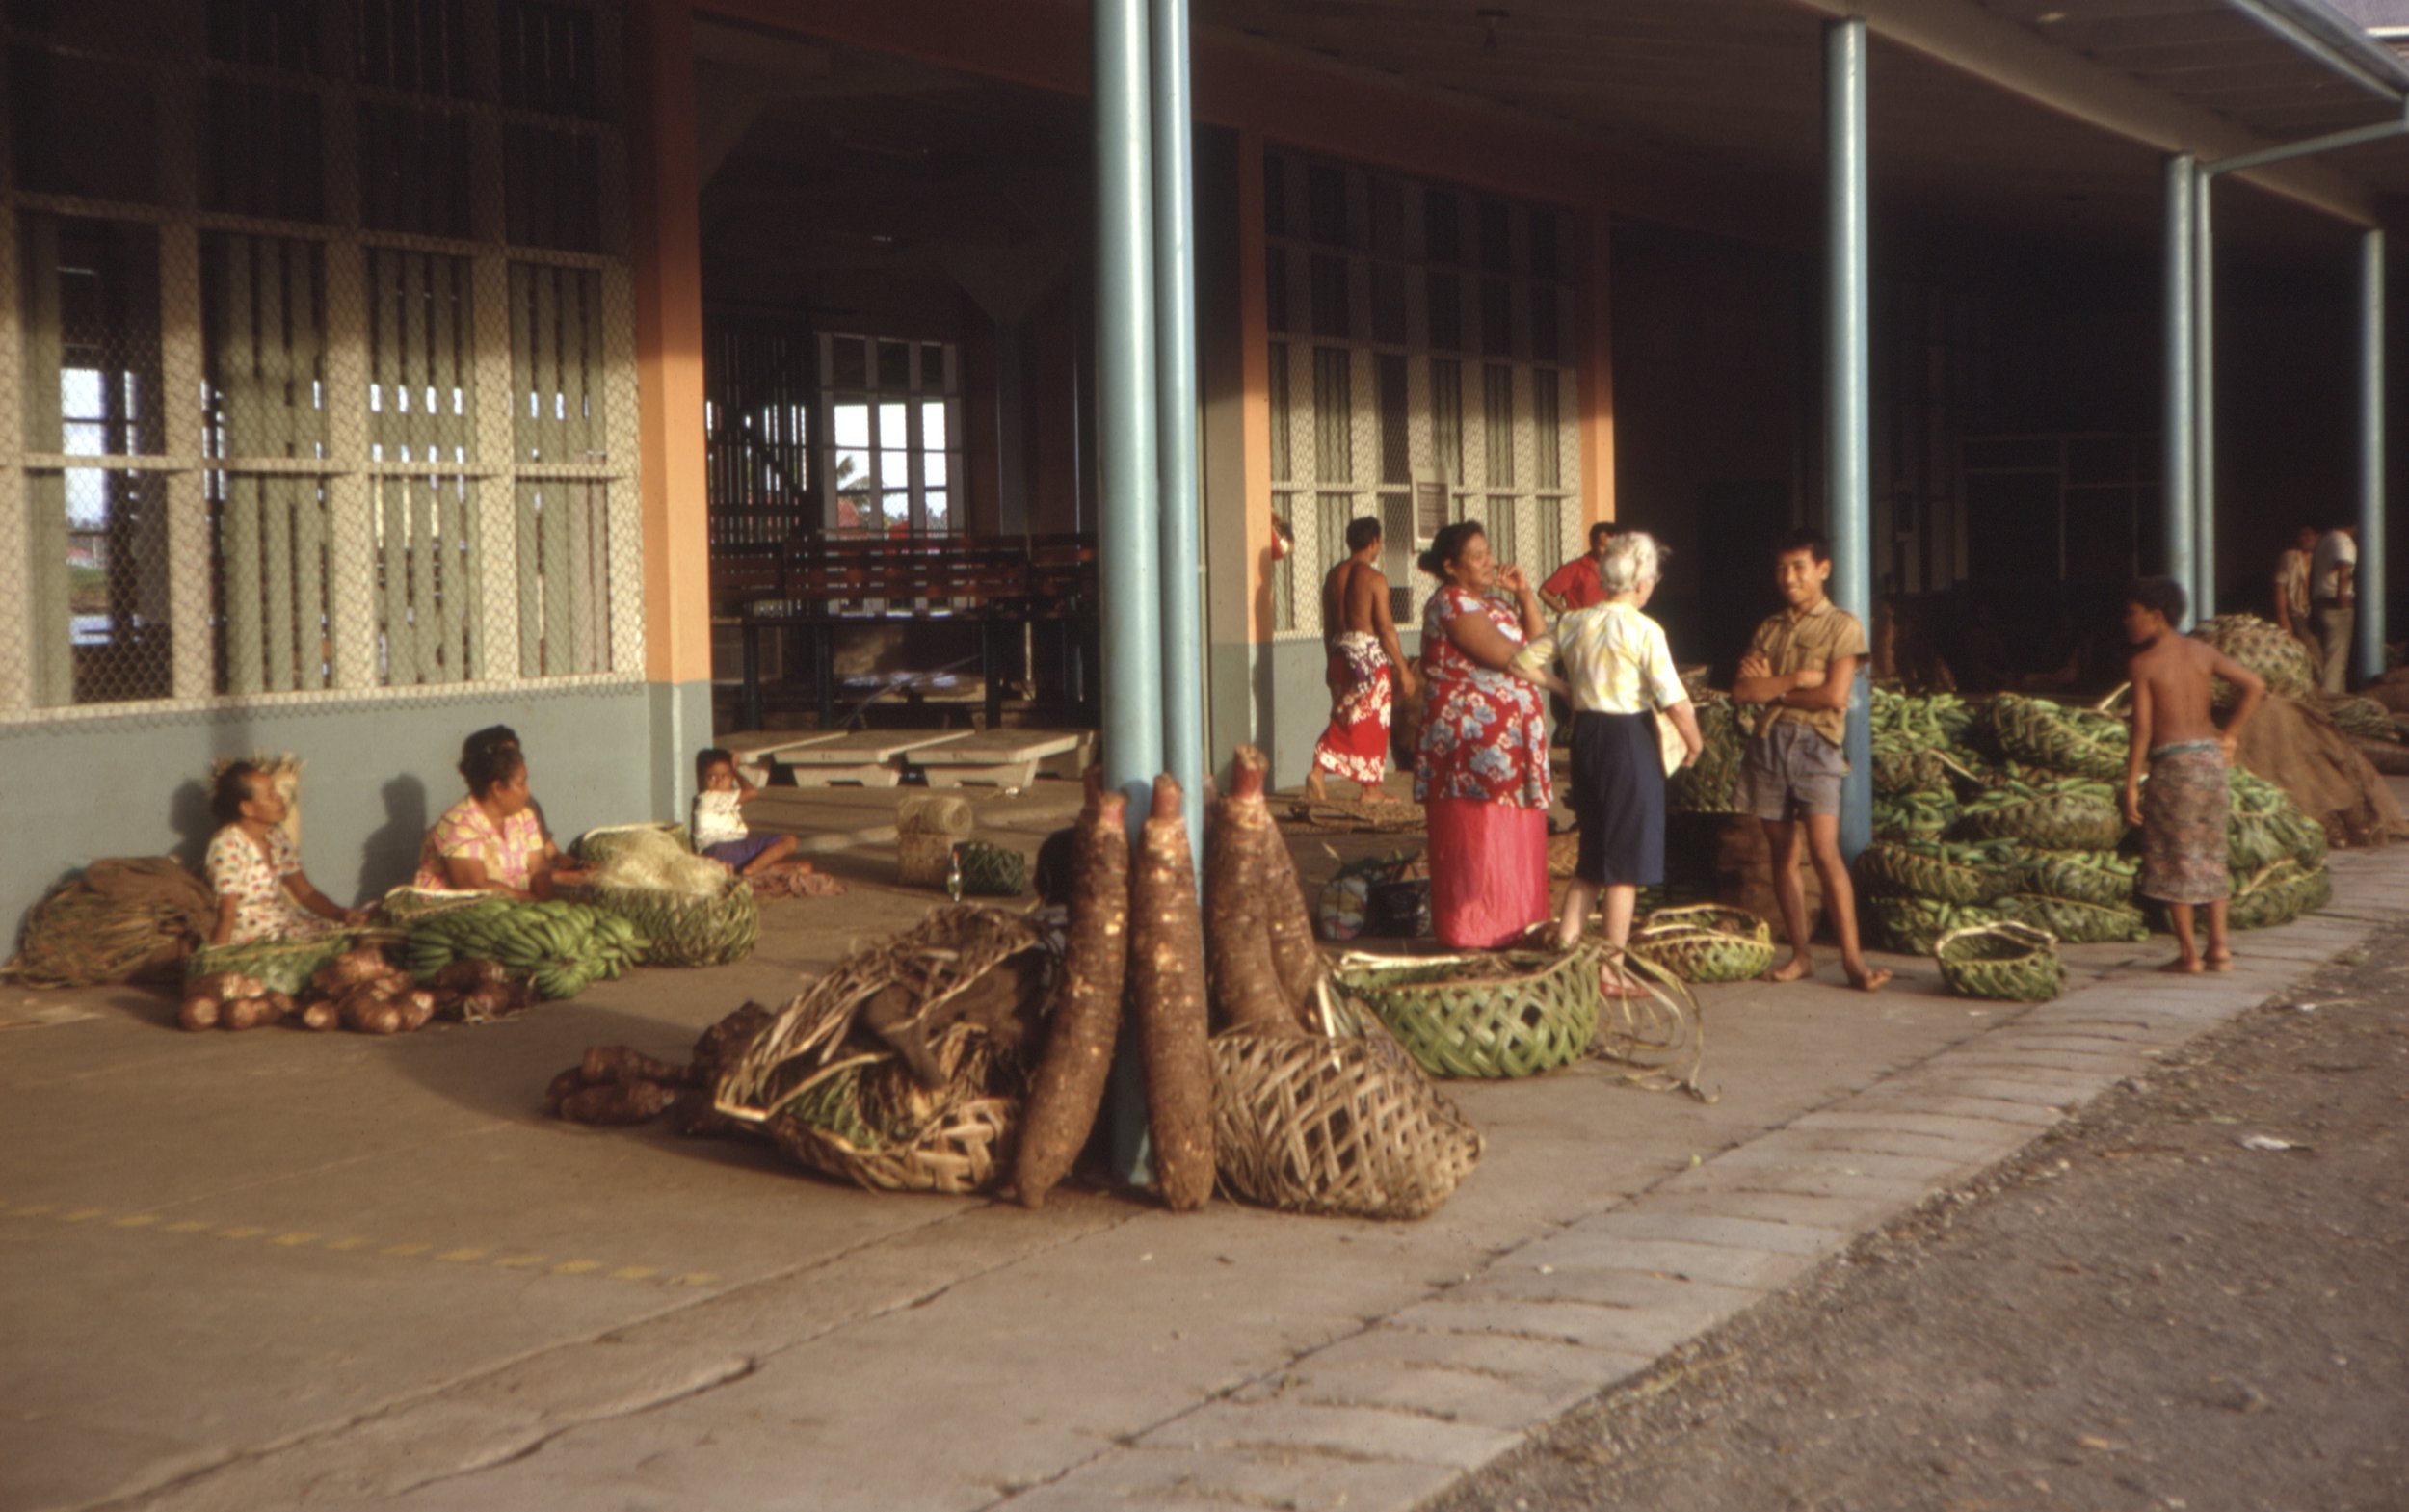 Slide #407 "Market in West Samoa"